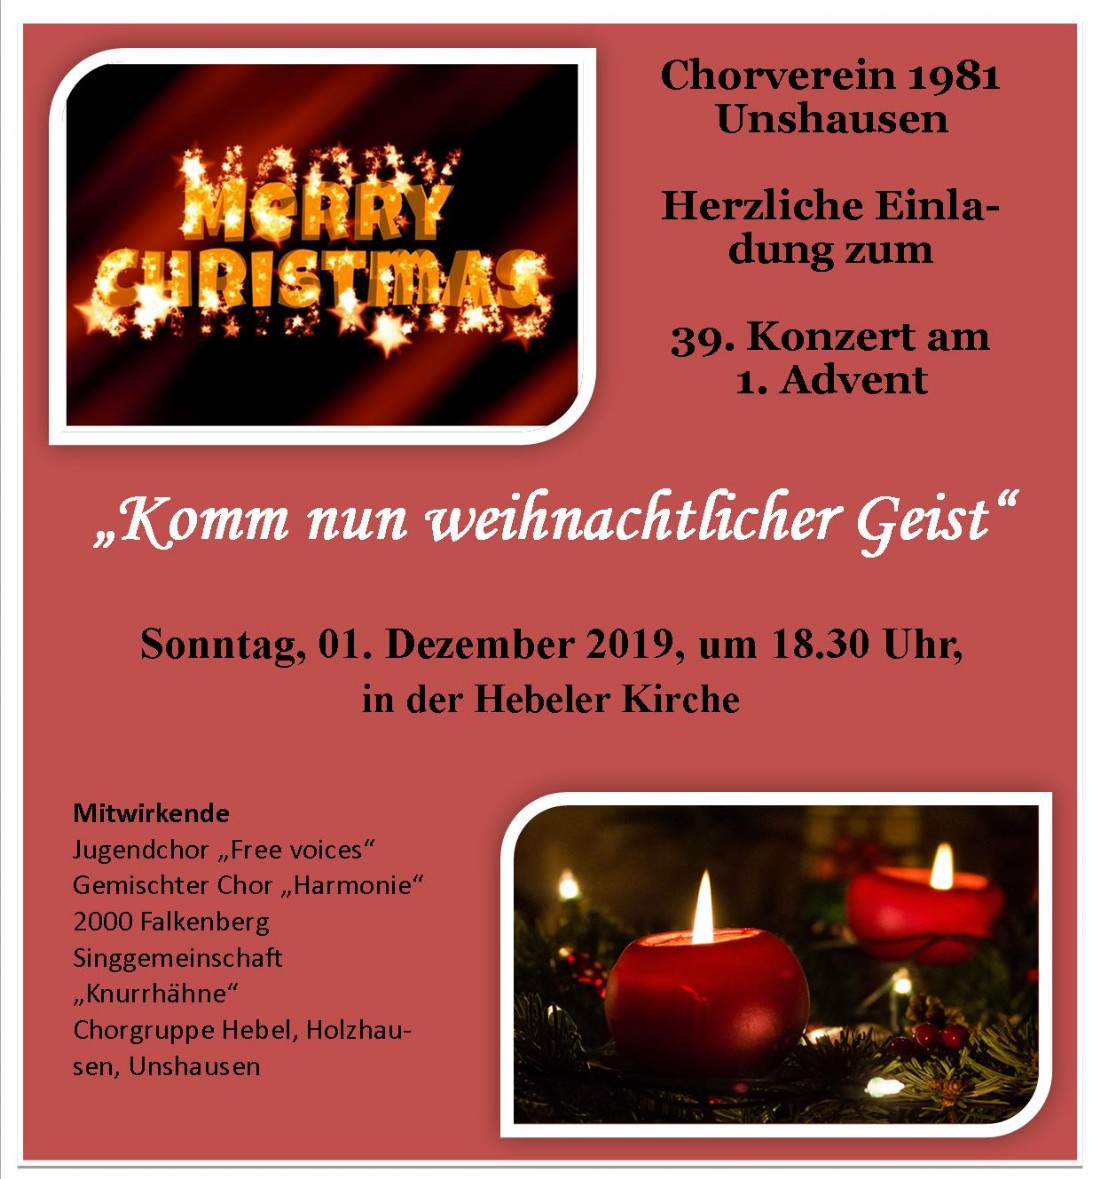 Chorverein Unshausen Advent 2019